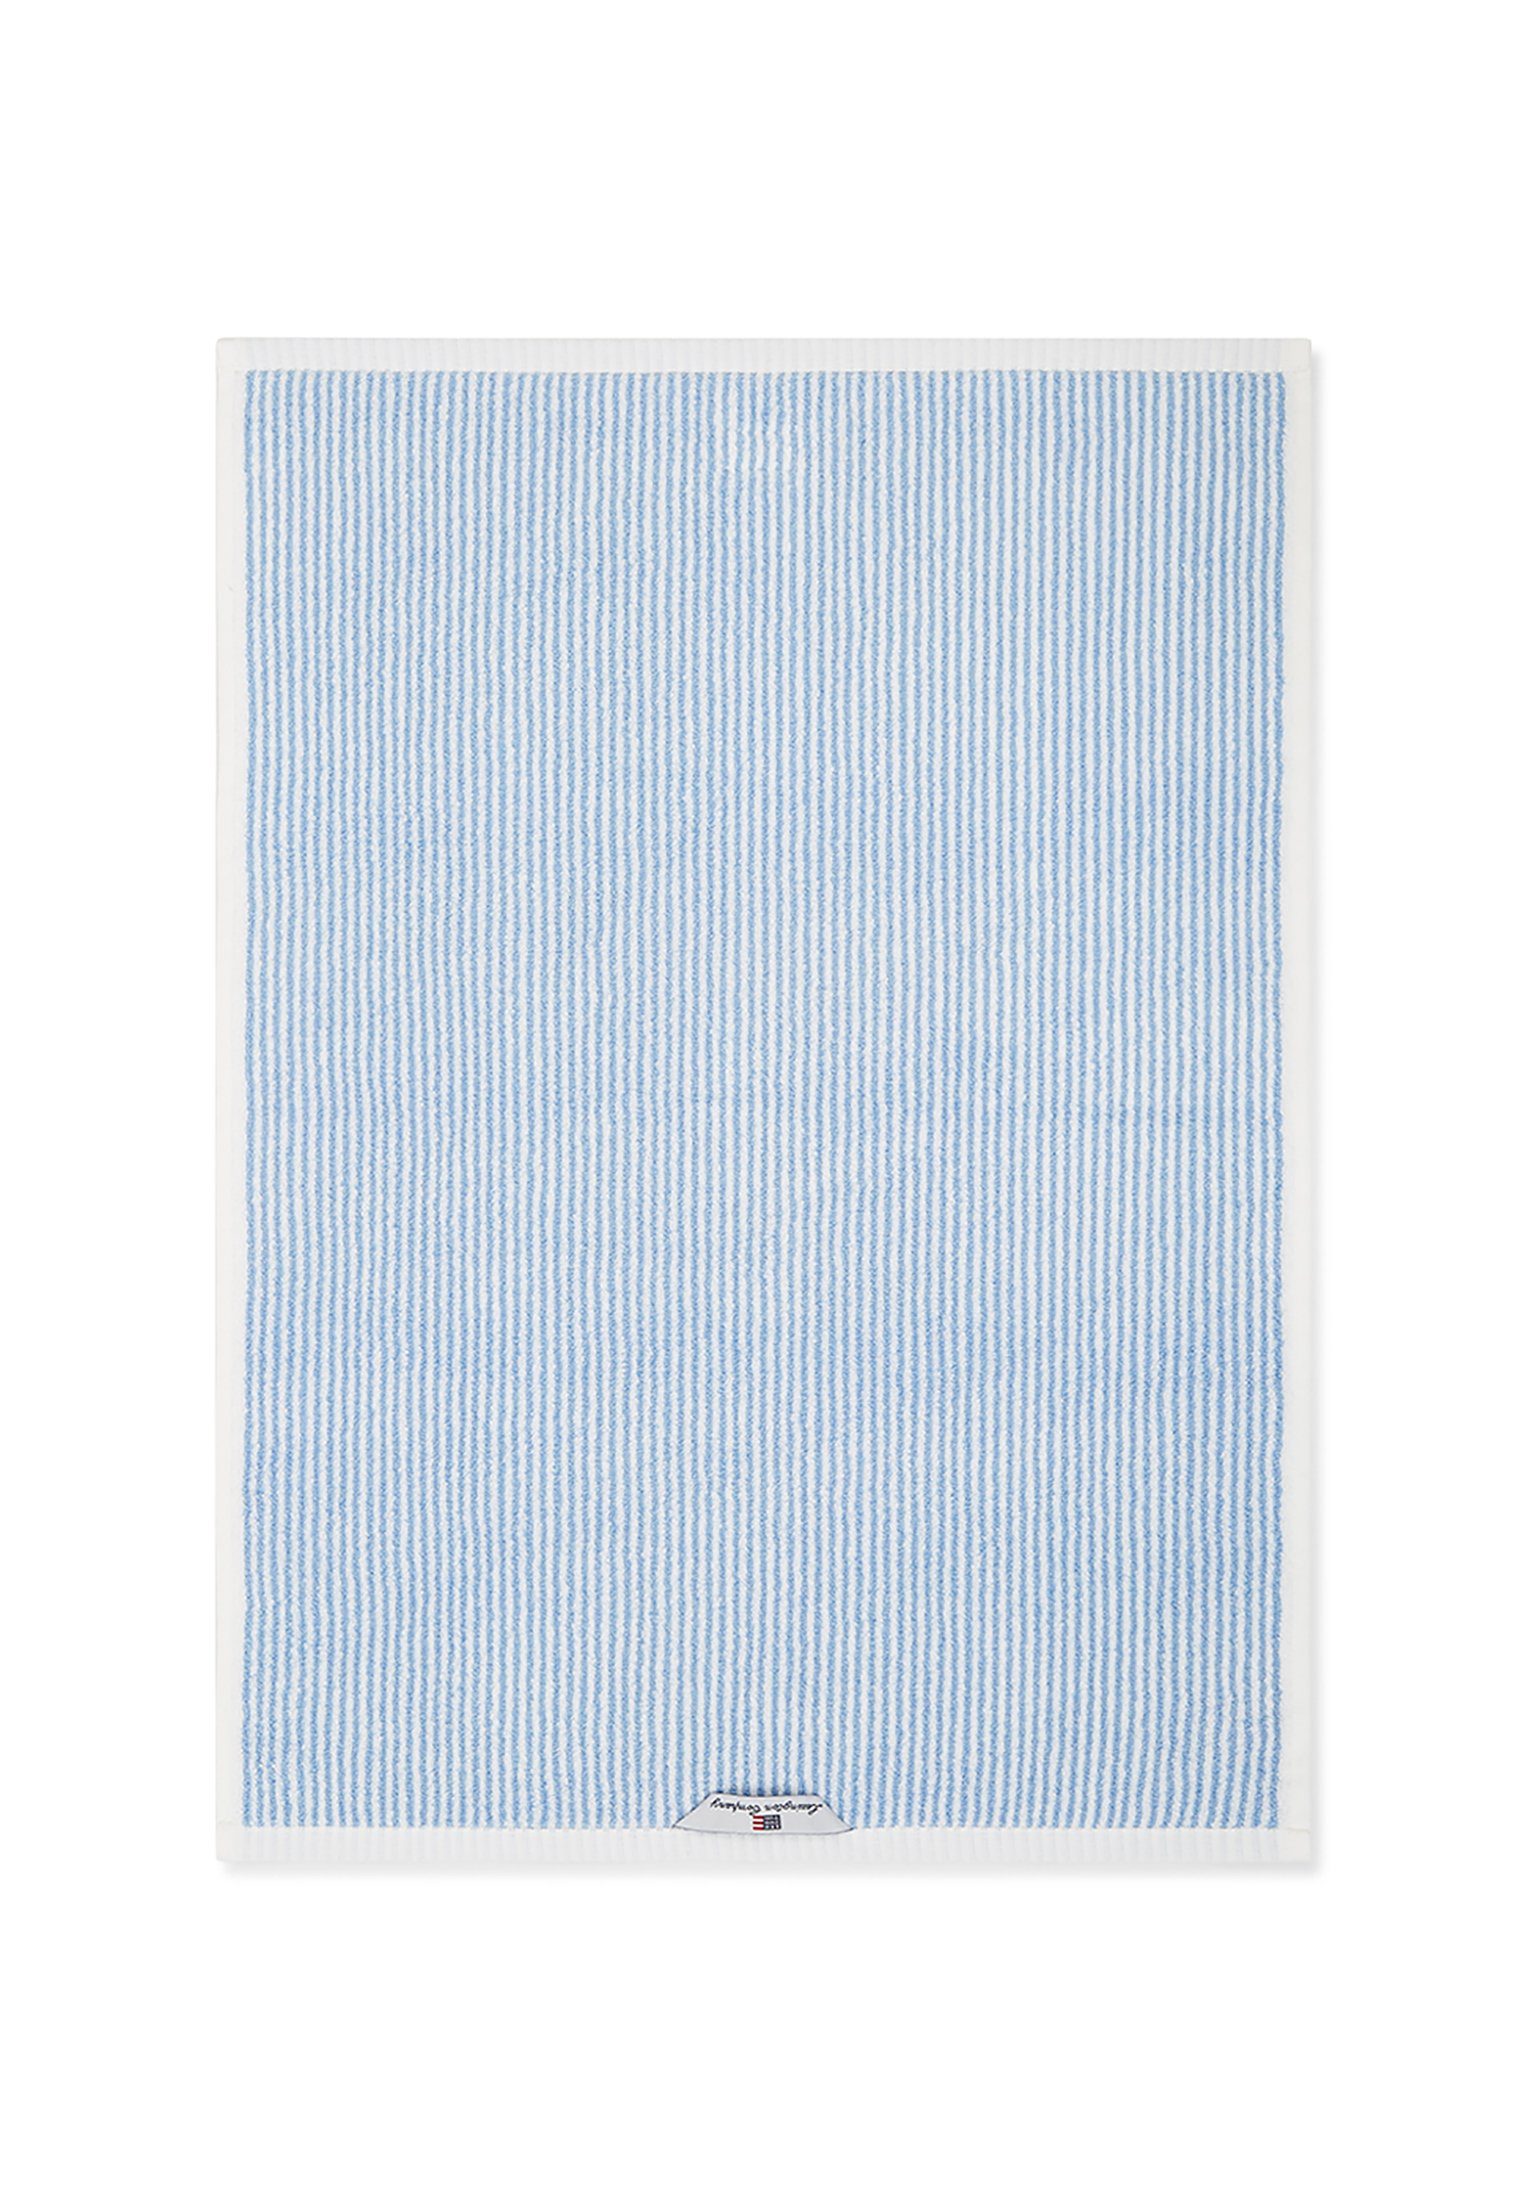 Original white/blue Lexington Handtuch Towel